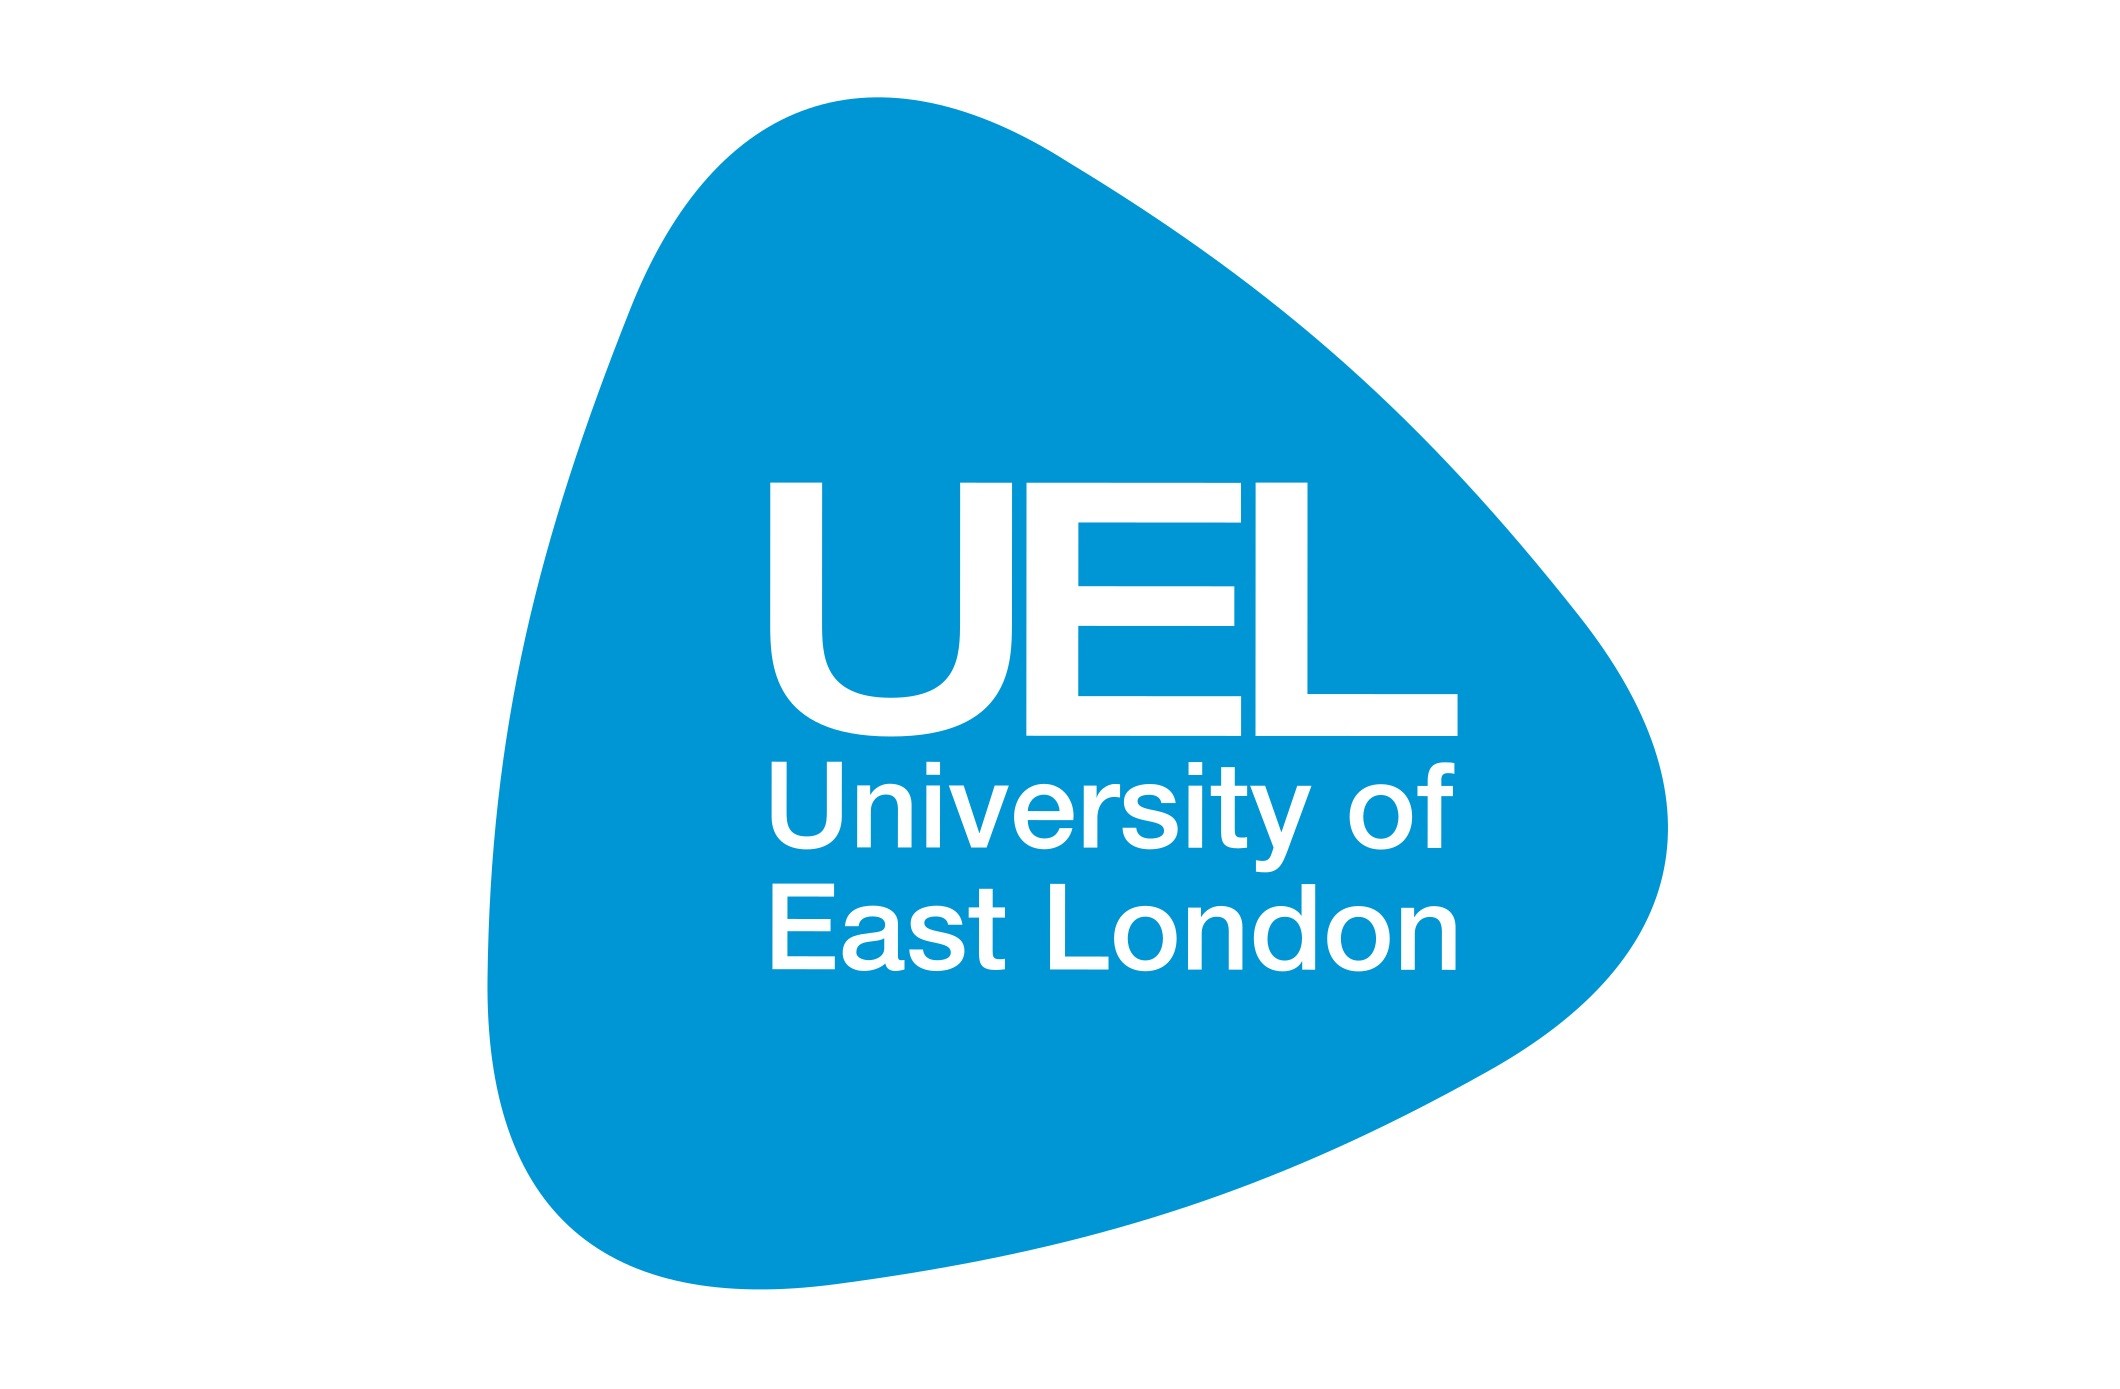 East London University